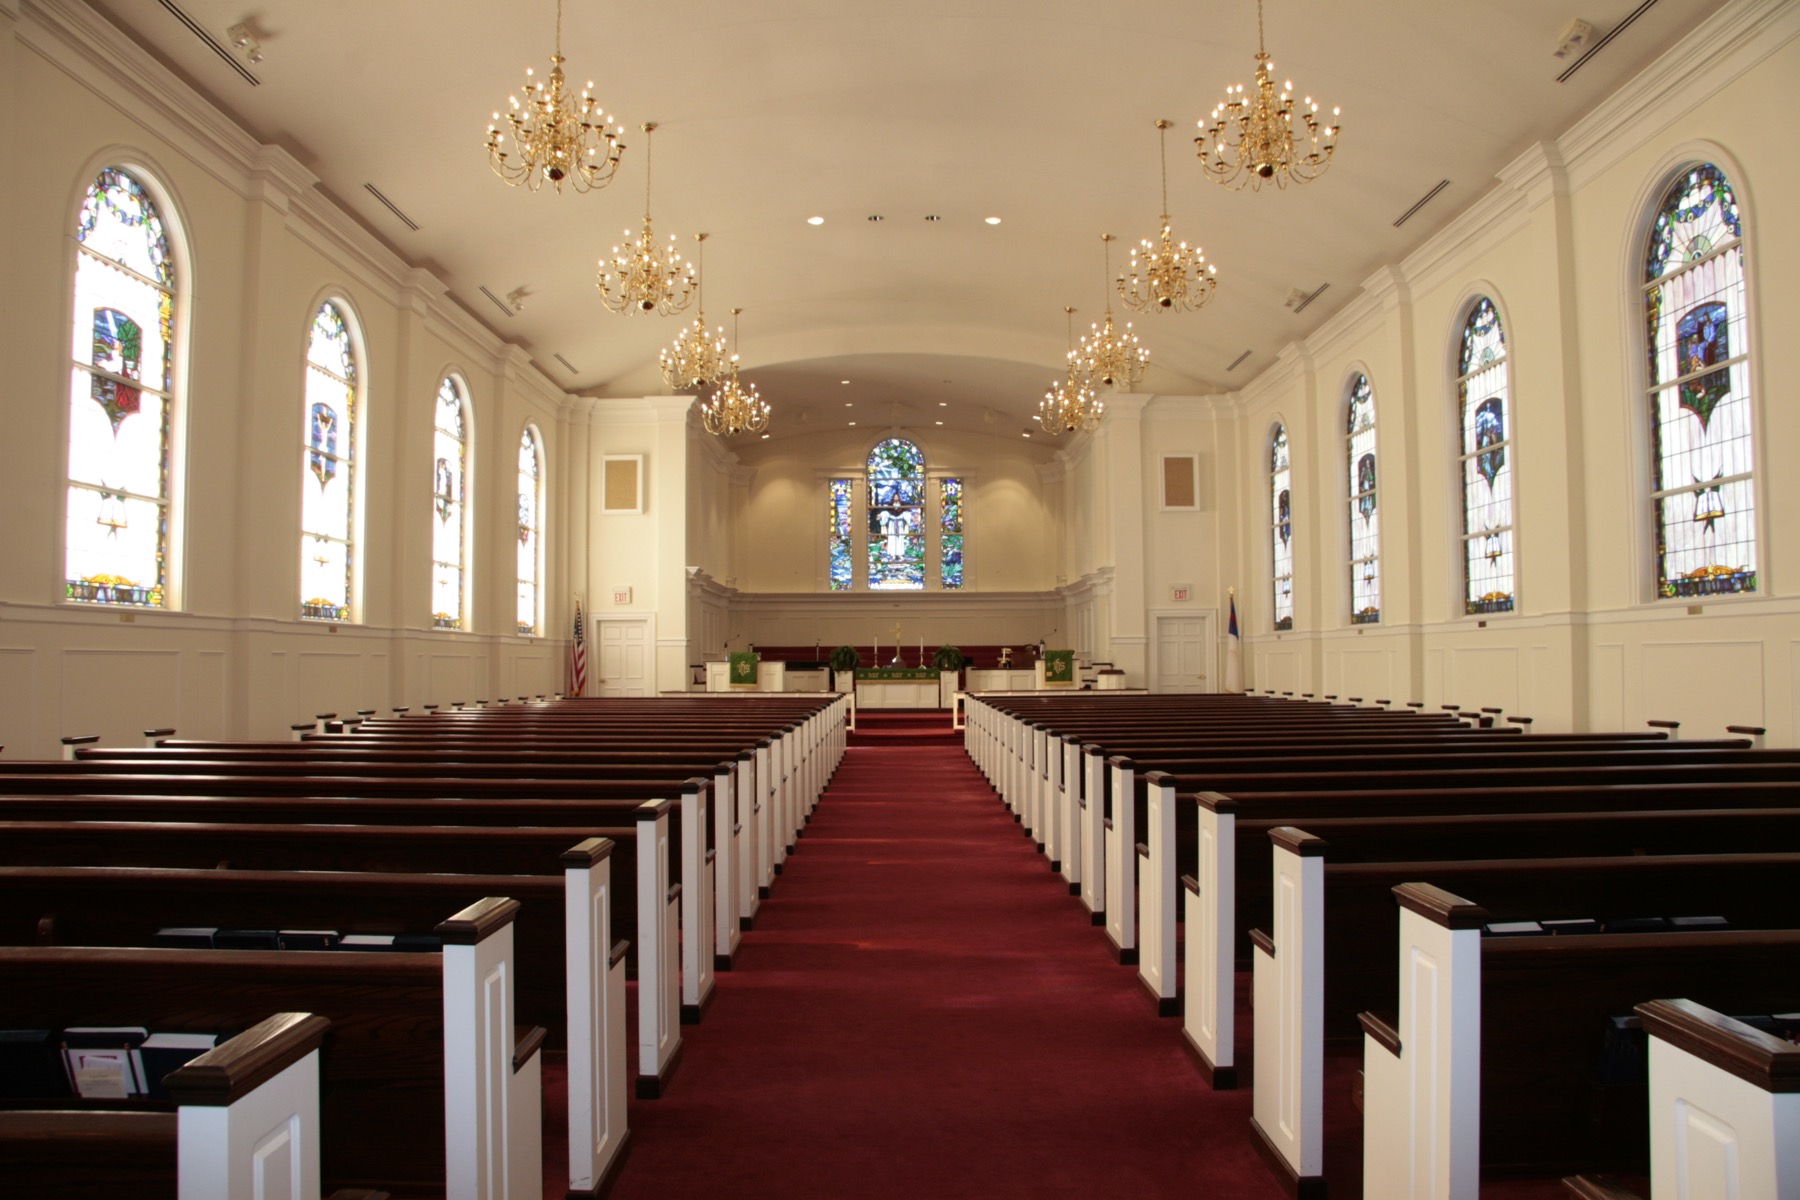 Shari – Elizabeth Chapel United Methodist cover photo